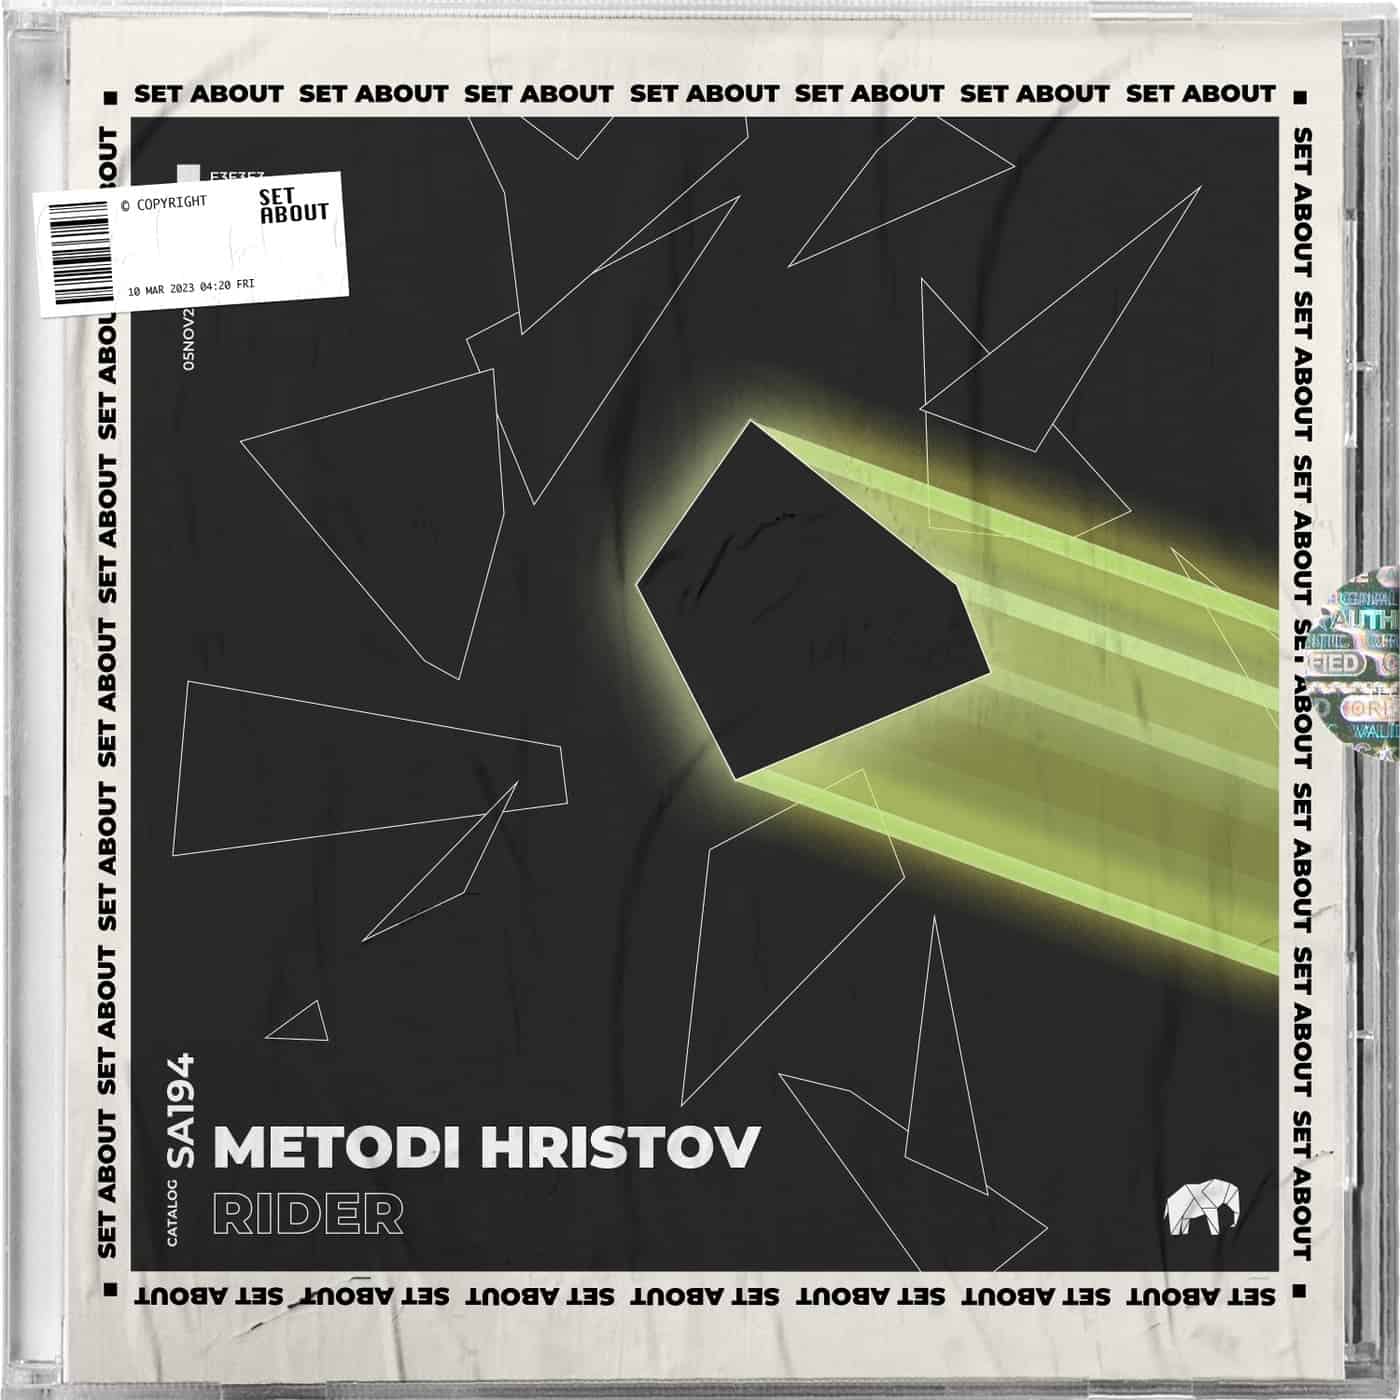 Download Metodi Hristov - Rider on Electrobuzz